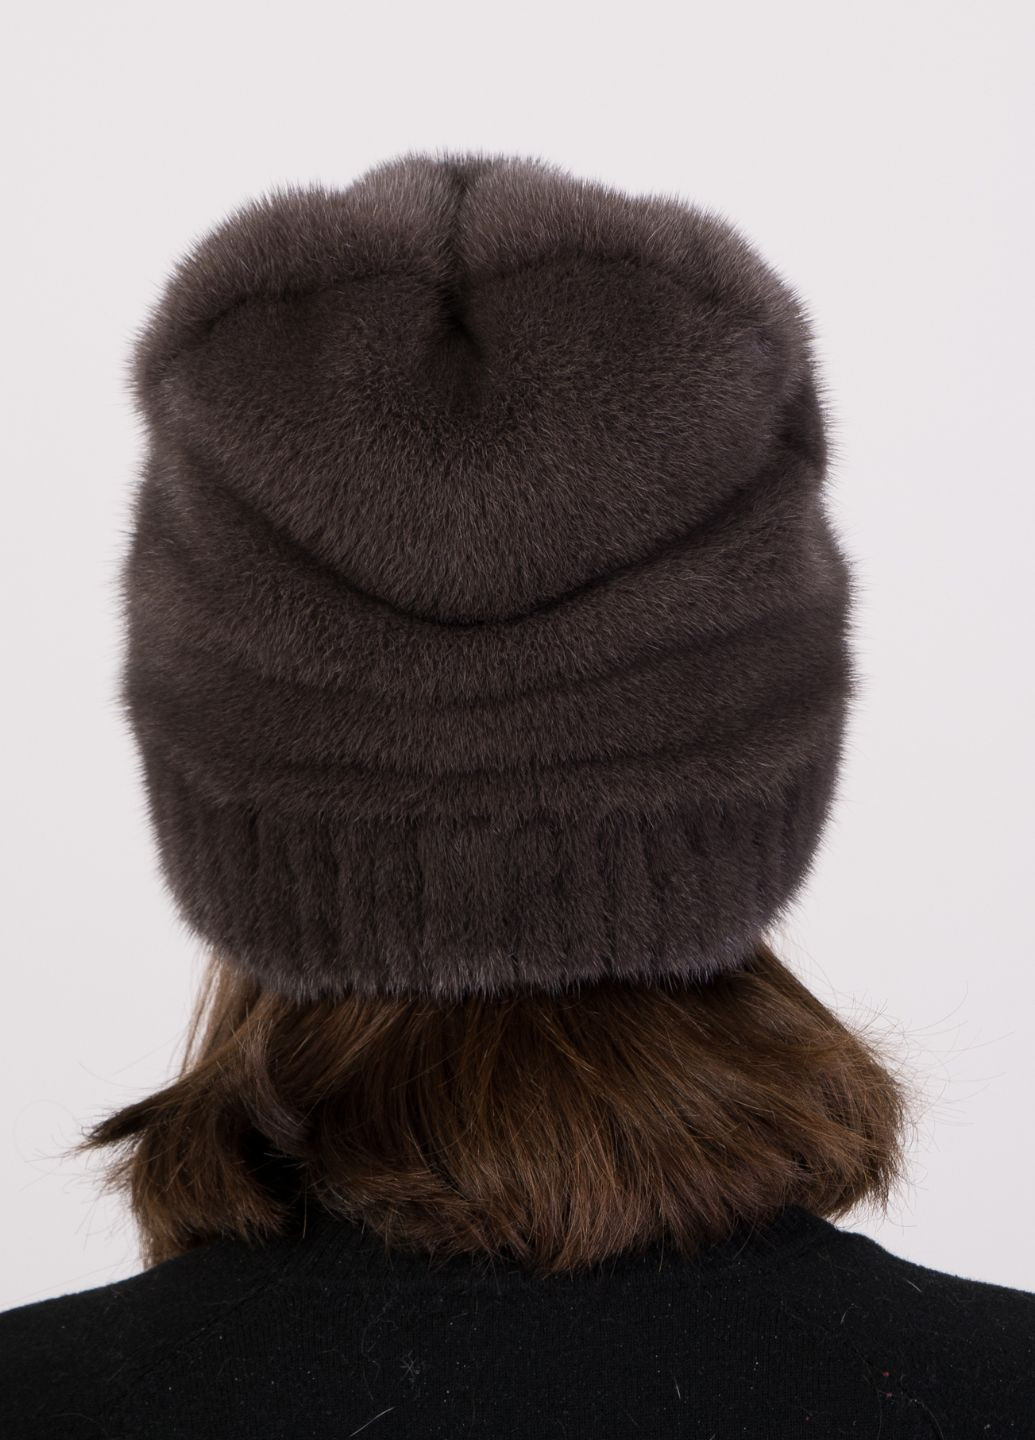 Жіноча зимова тепла норкова шапка Меховой Стиль рукавичка (270365805)